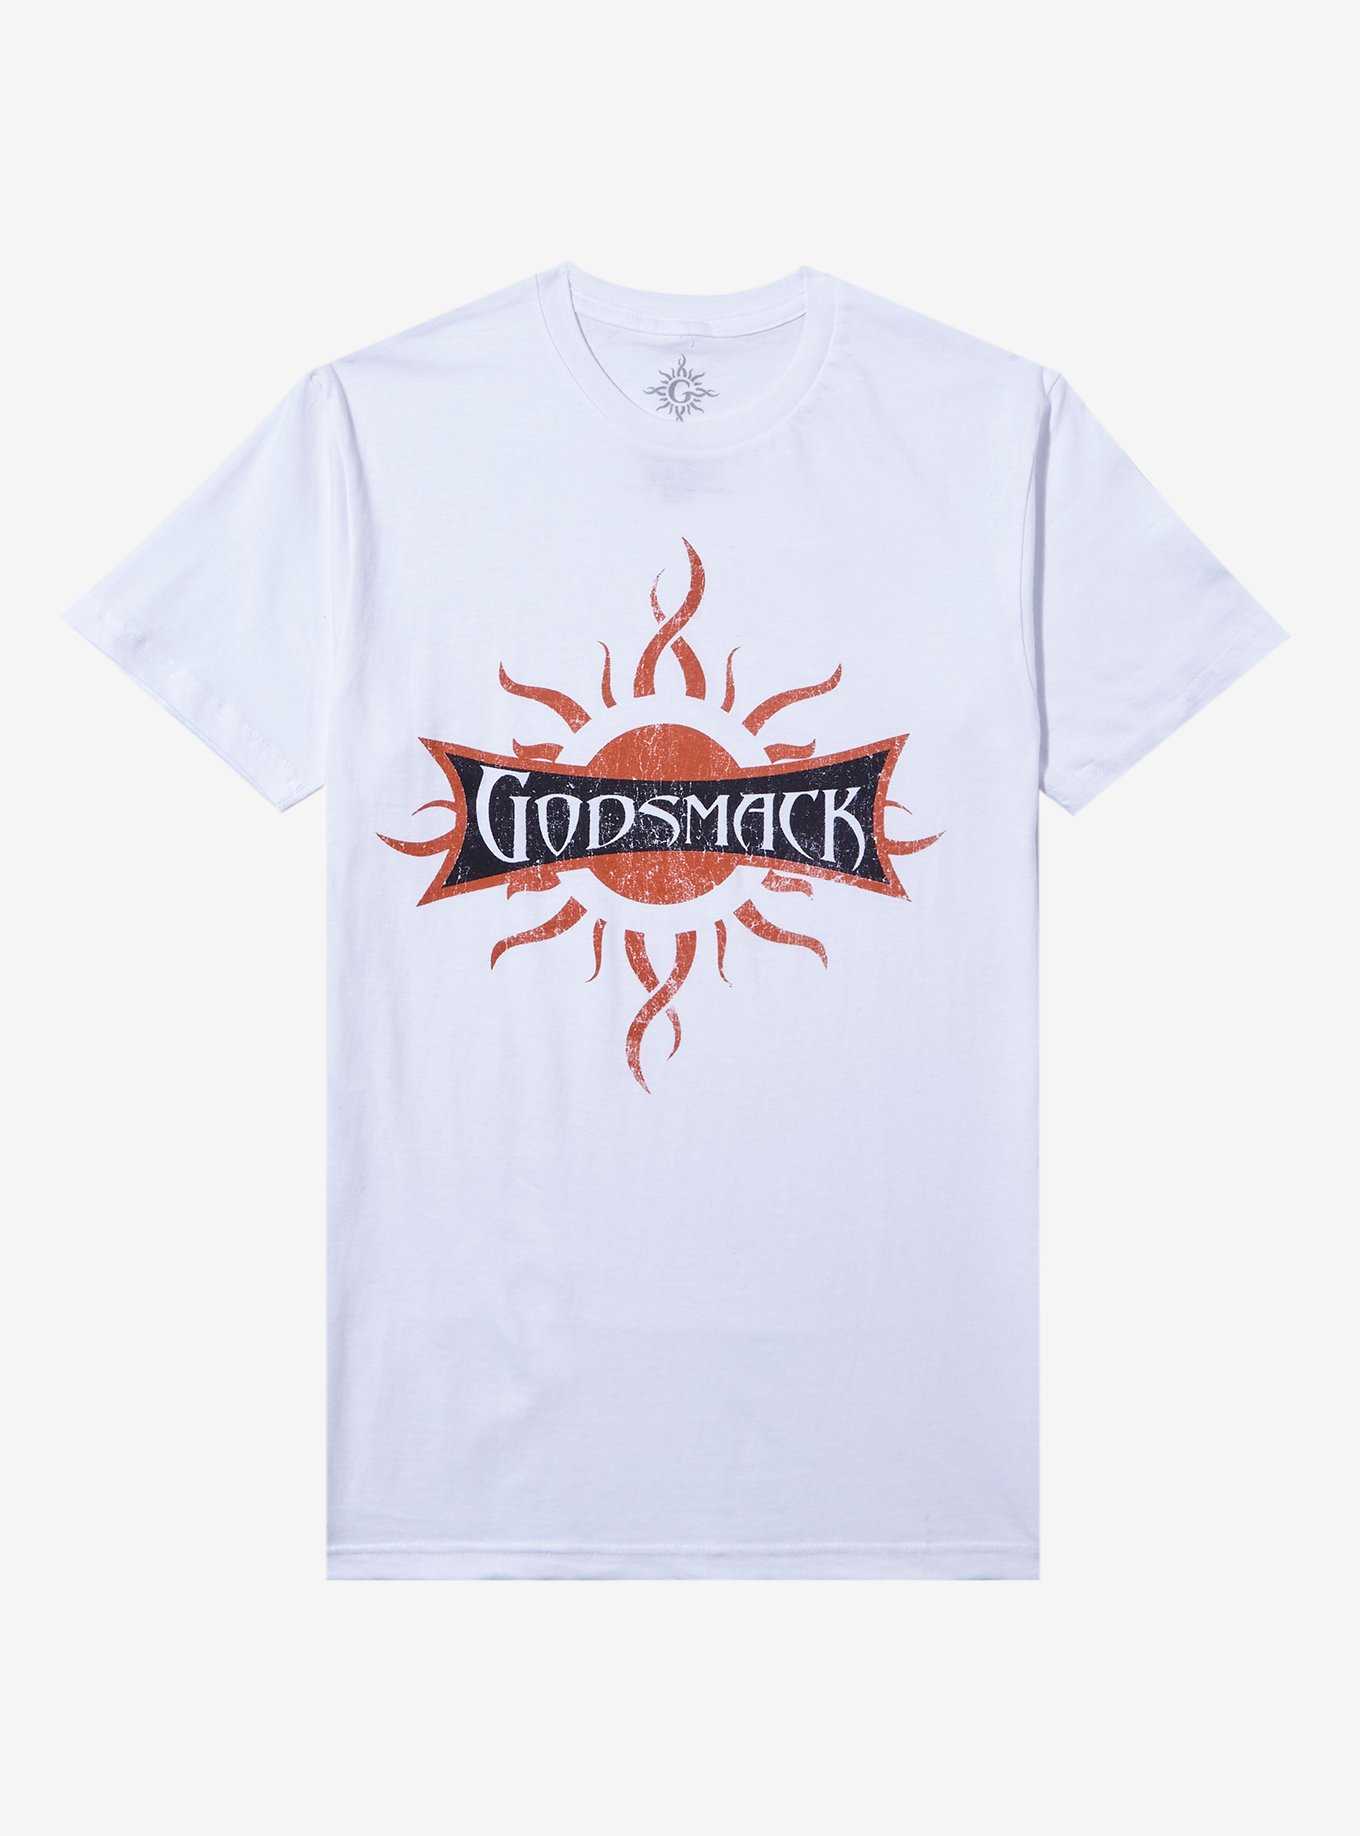 Godsmack Logo Boyfriend Fit Girls T-Shirt, , hi-res